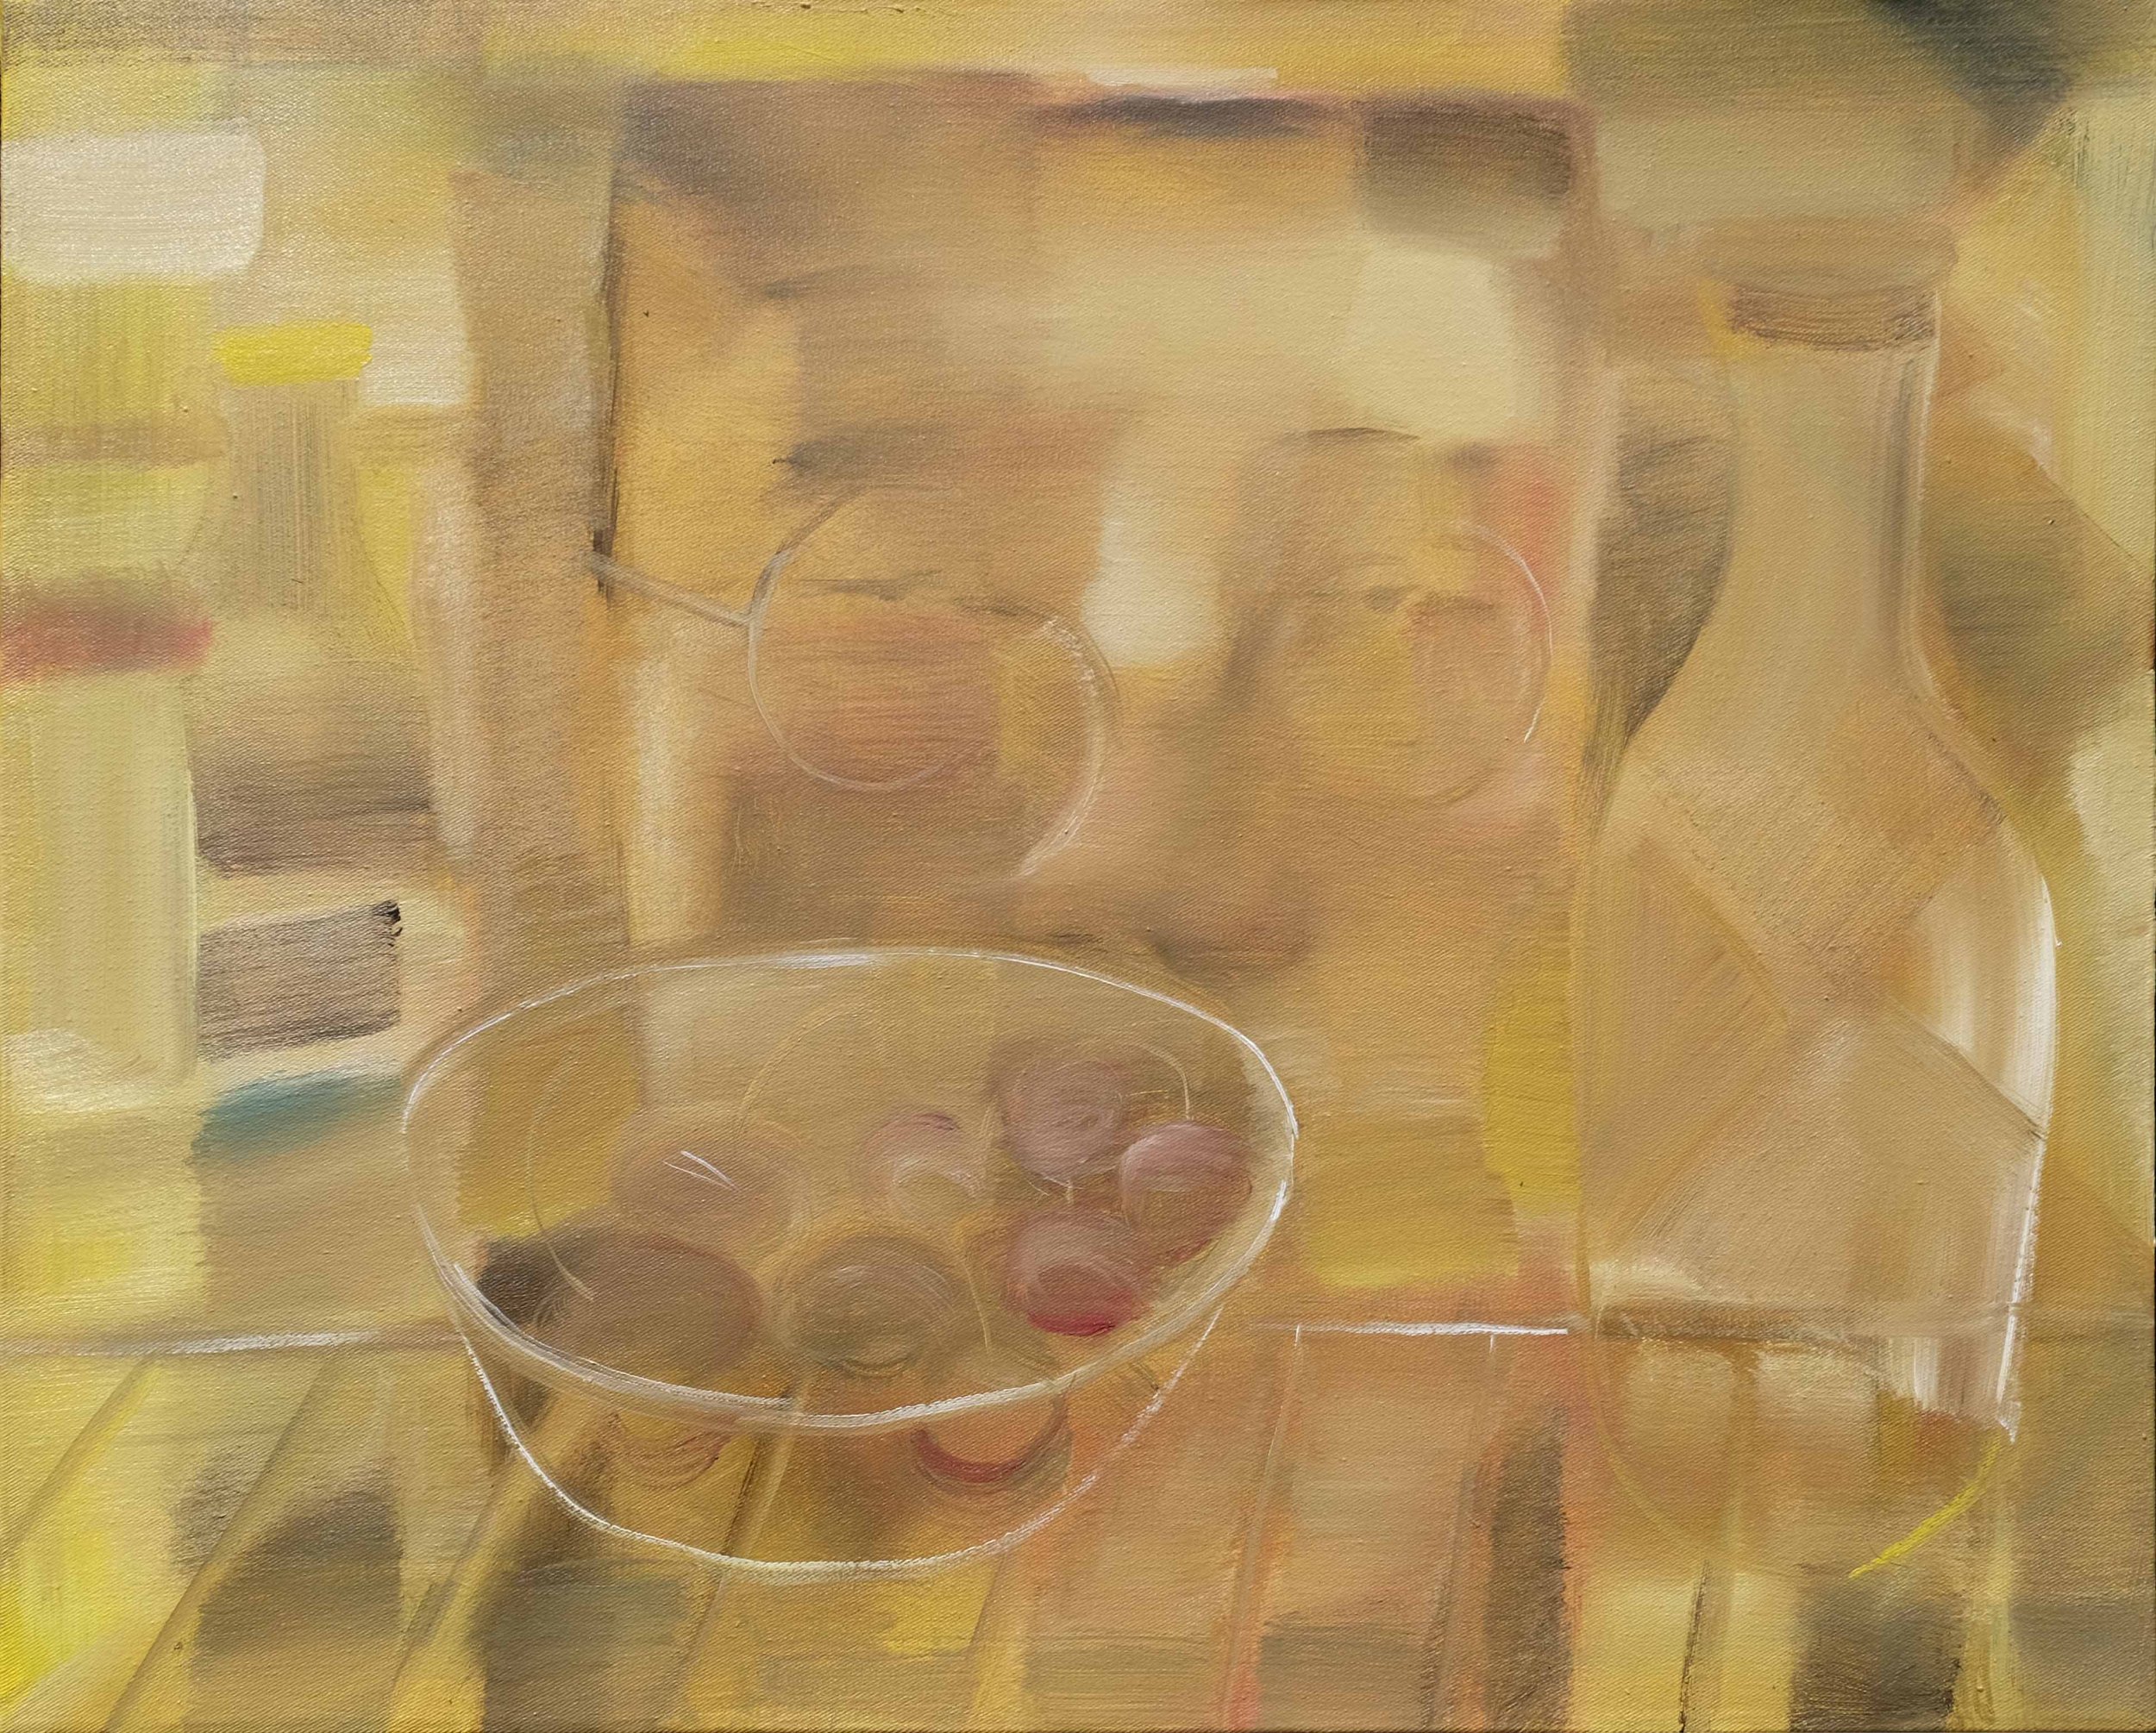   Supper Club  (2022) oil on canvas, 51 x 41cm 